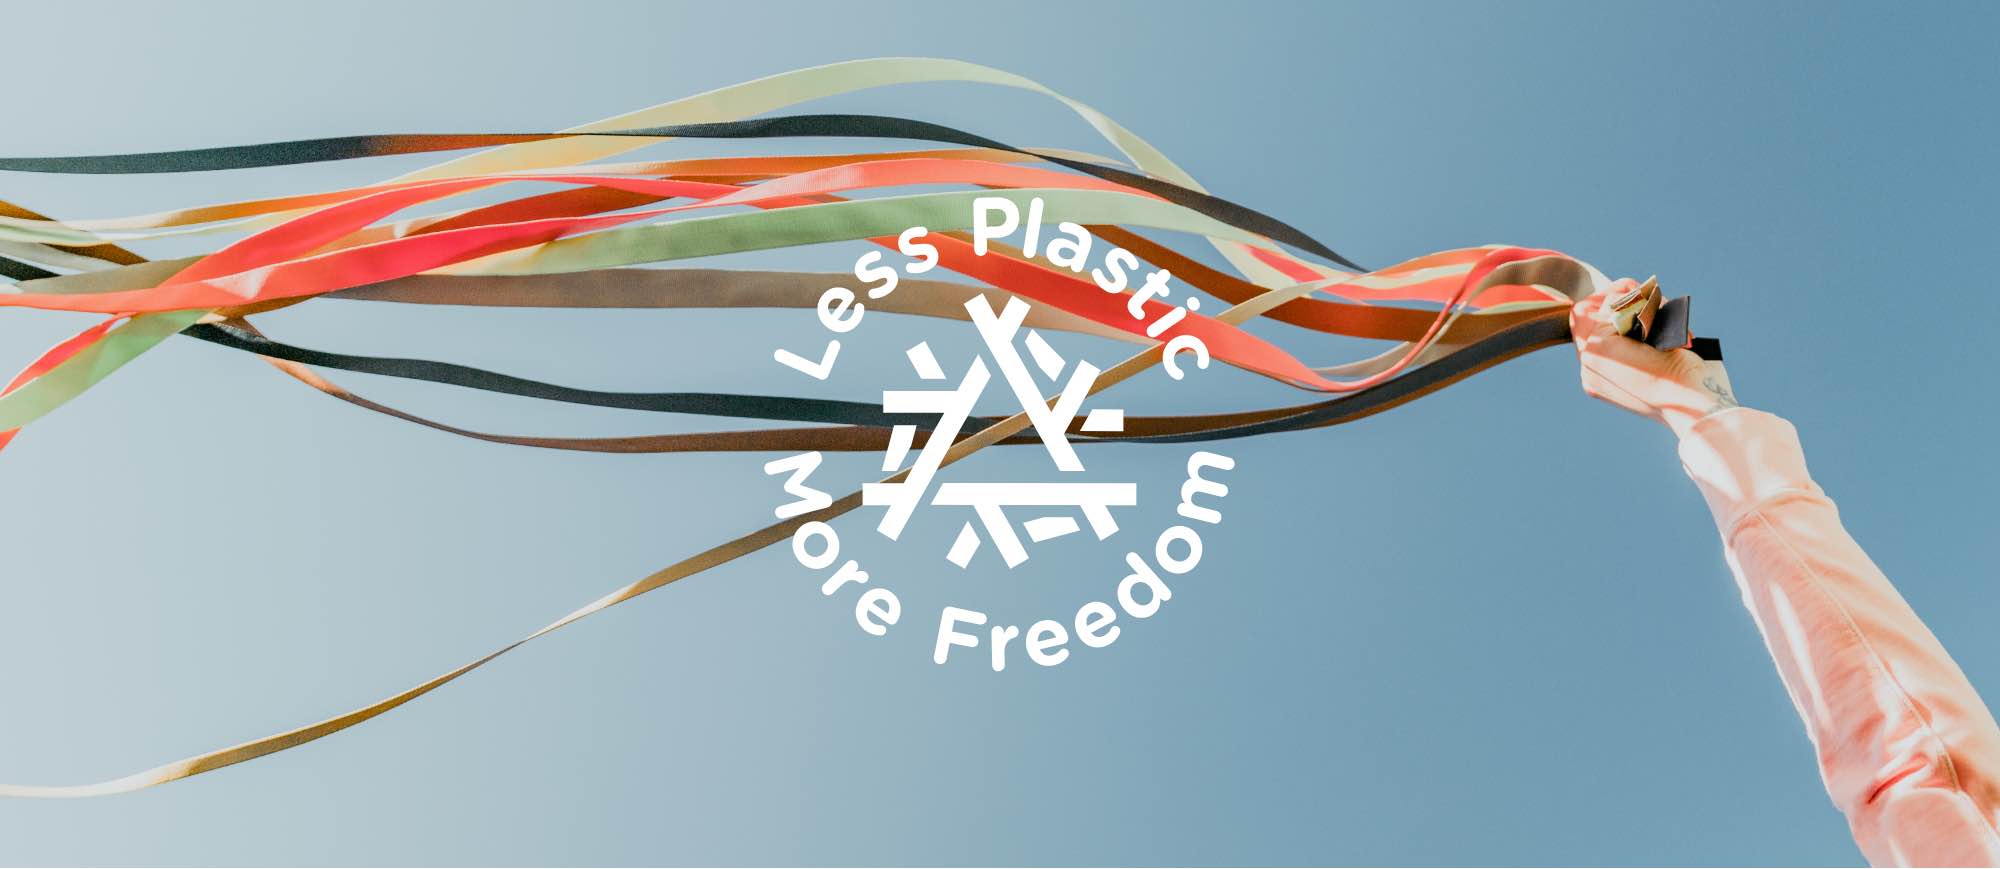 Less Plastic. More Freedom.